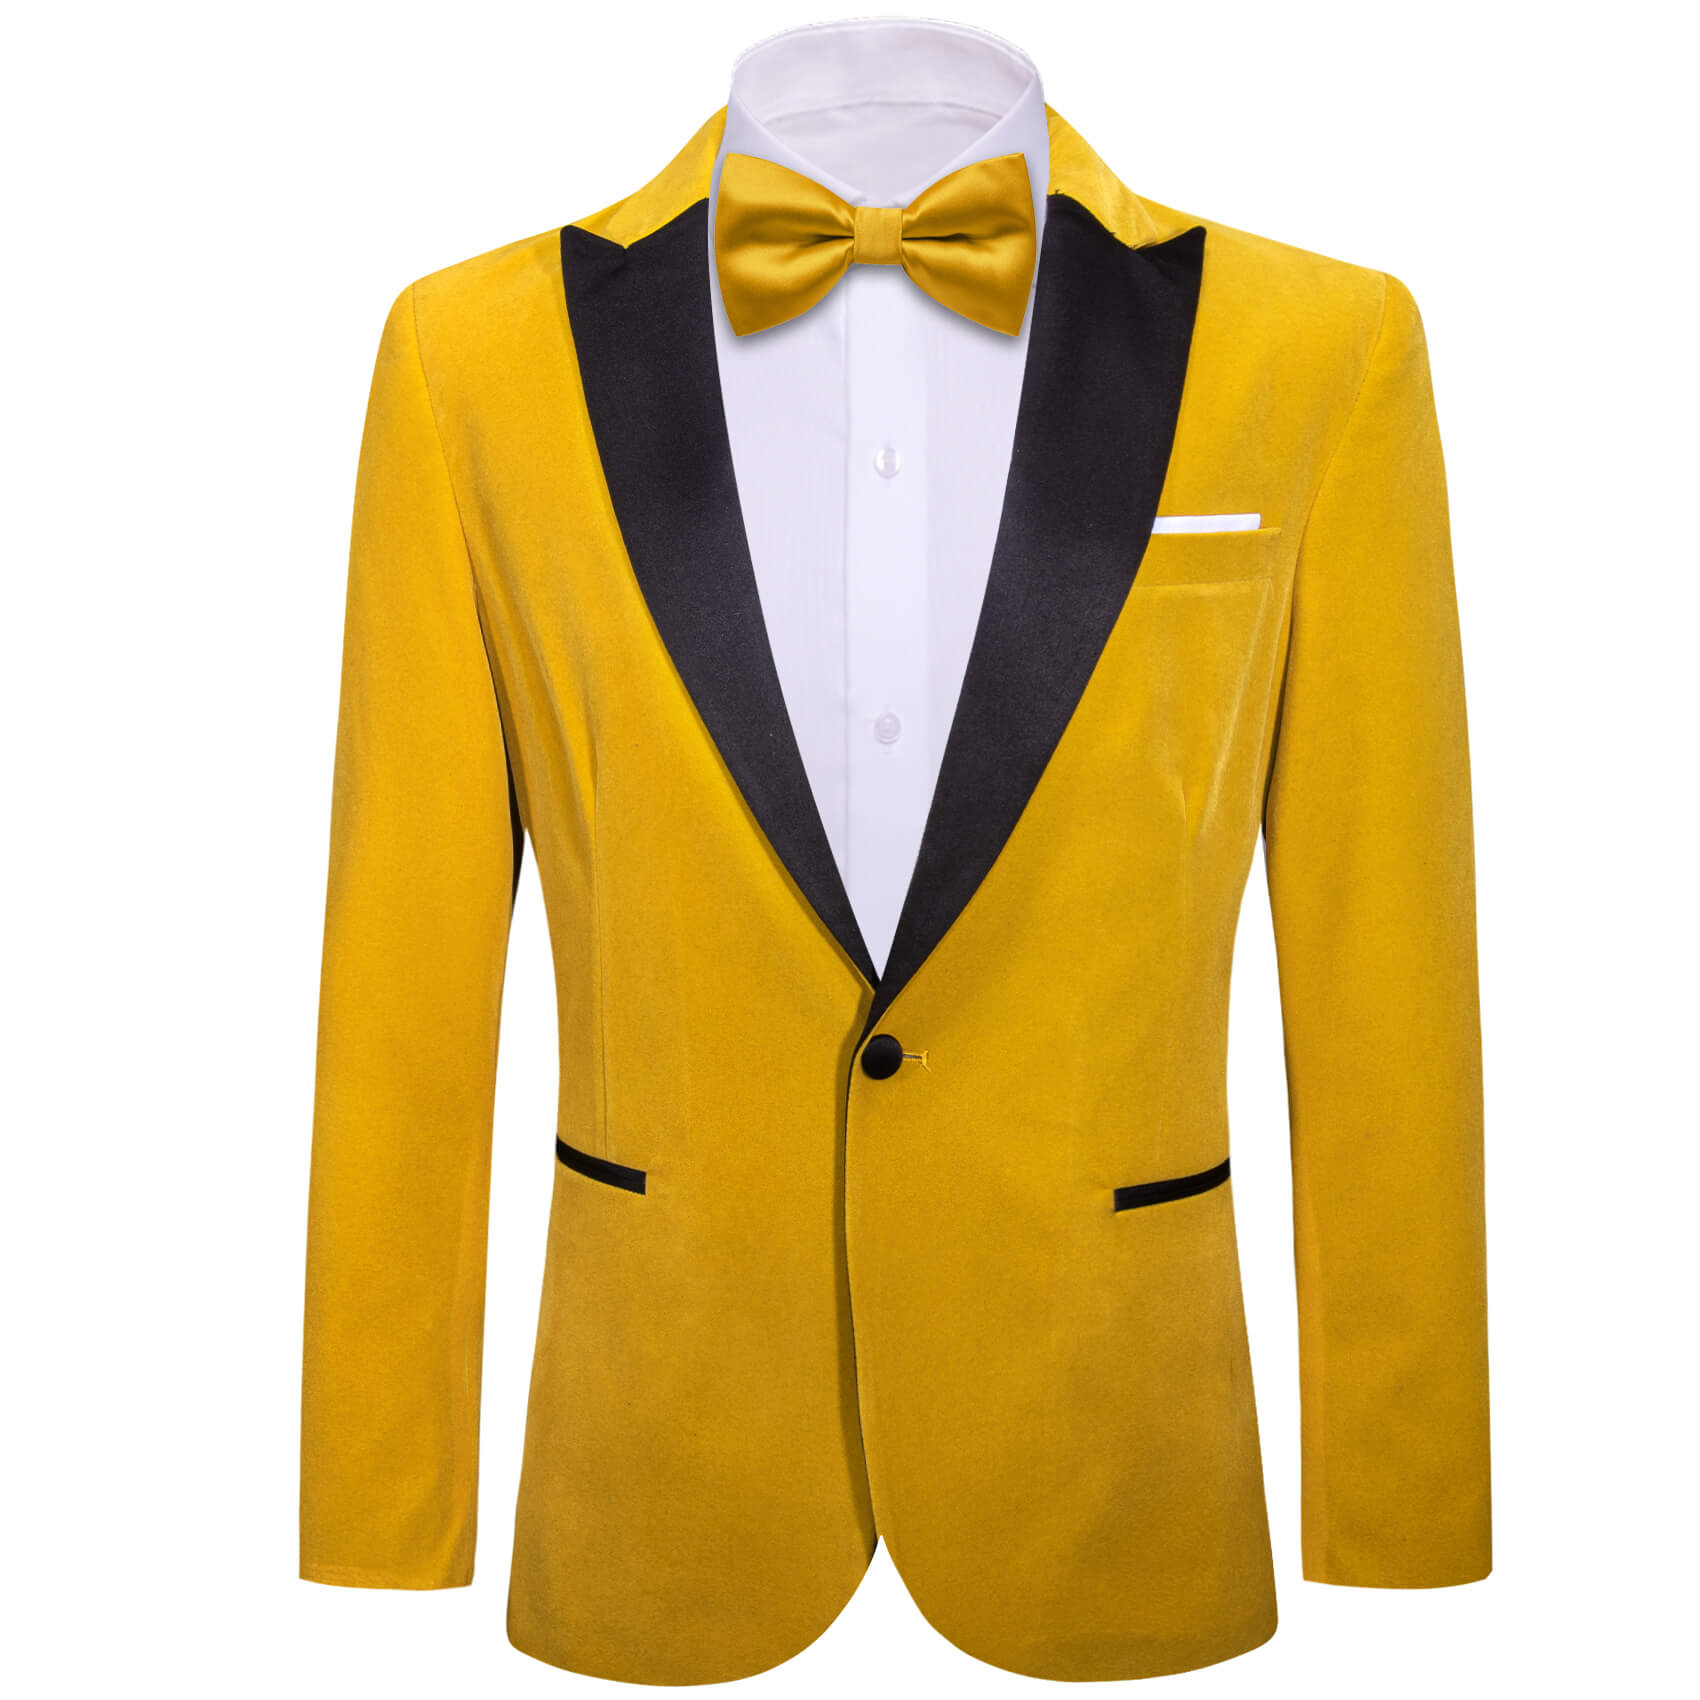 Barry.wang Men's Suit Goldenrod Yellow Solid Silk Peak Collar Suit New